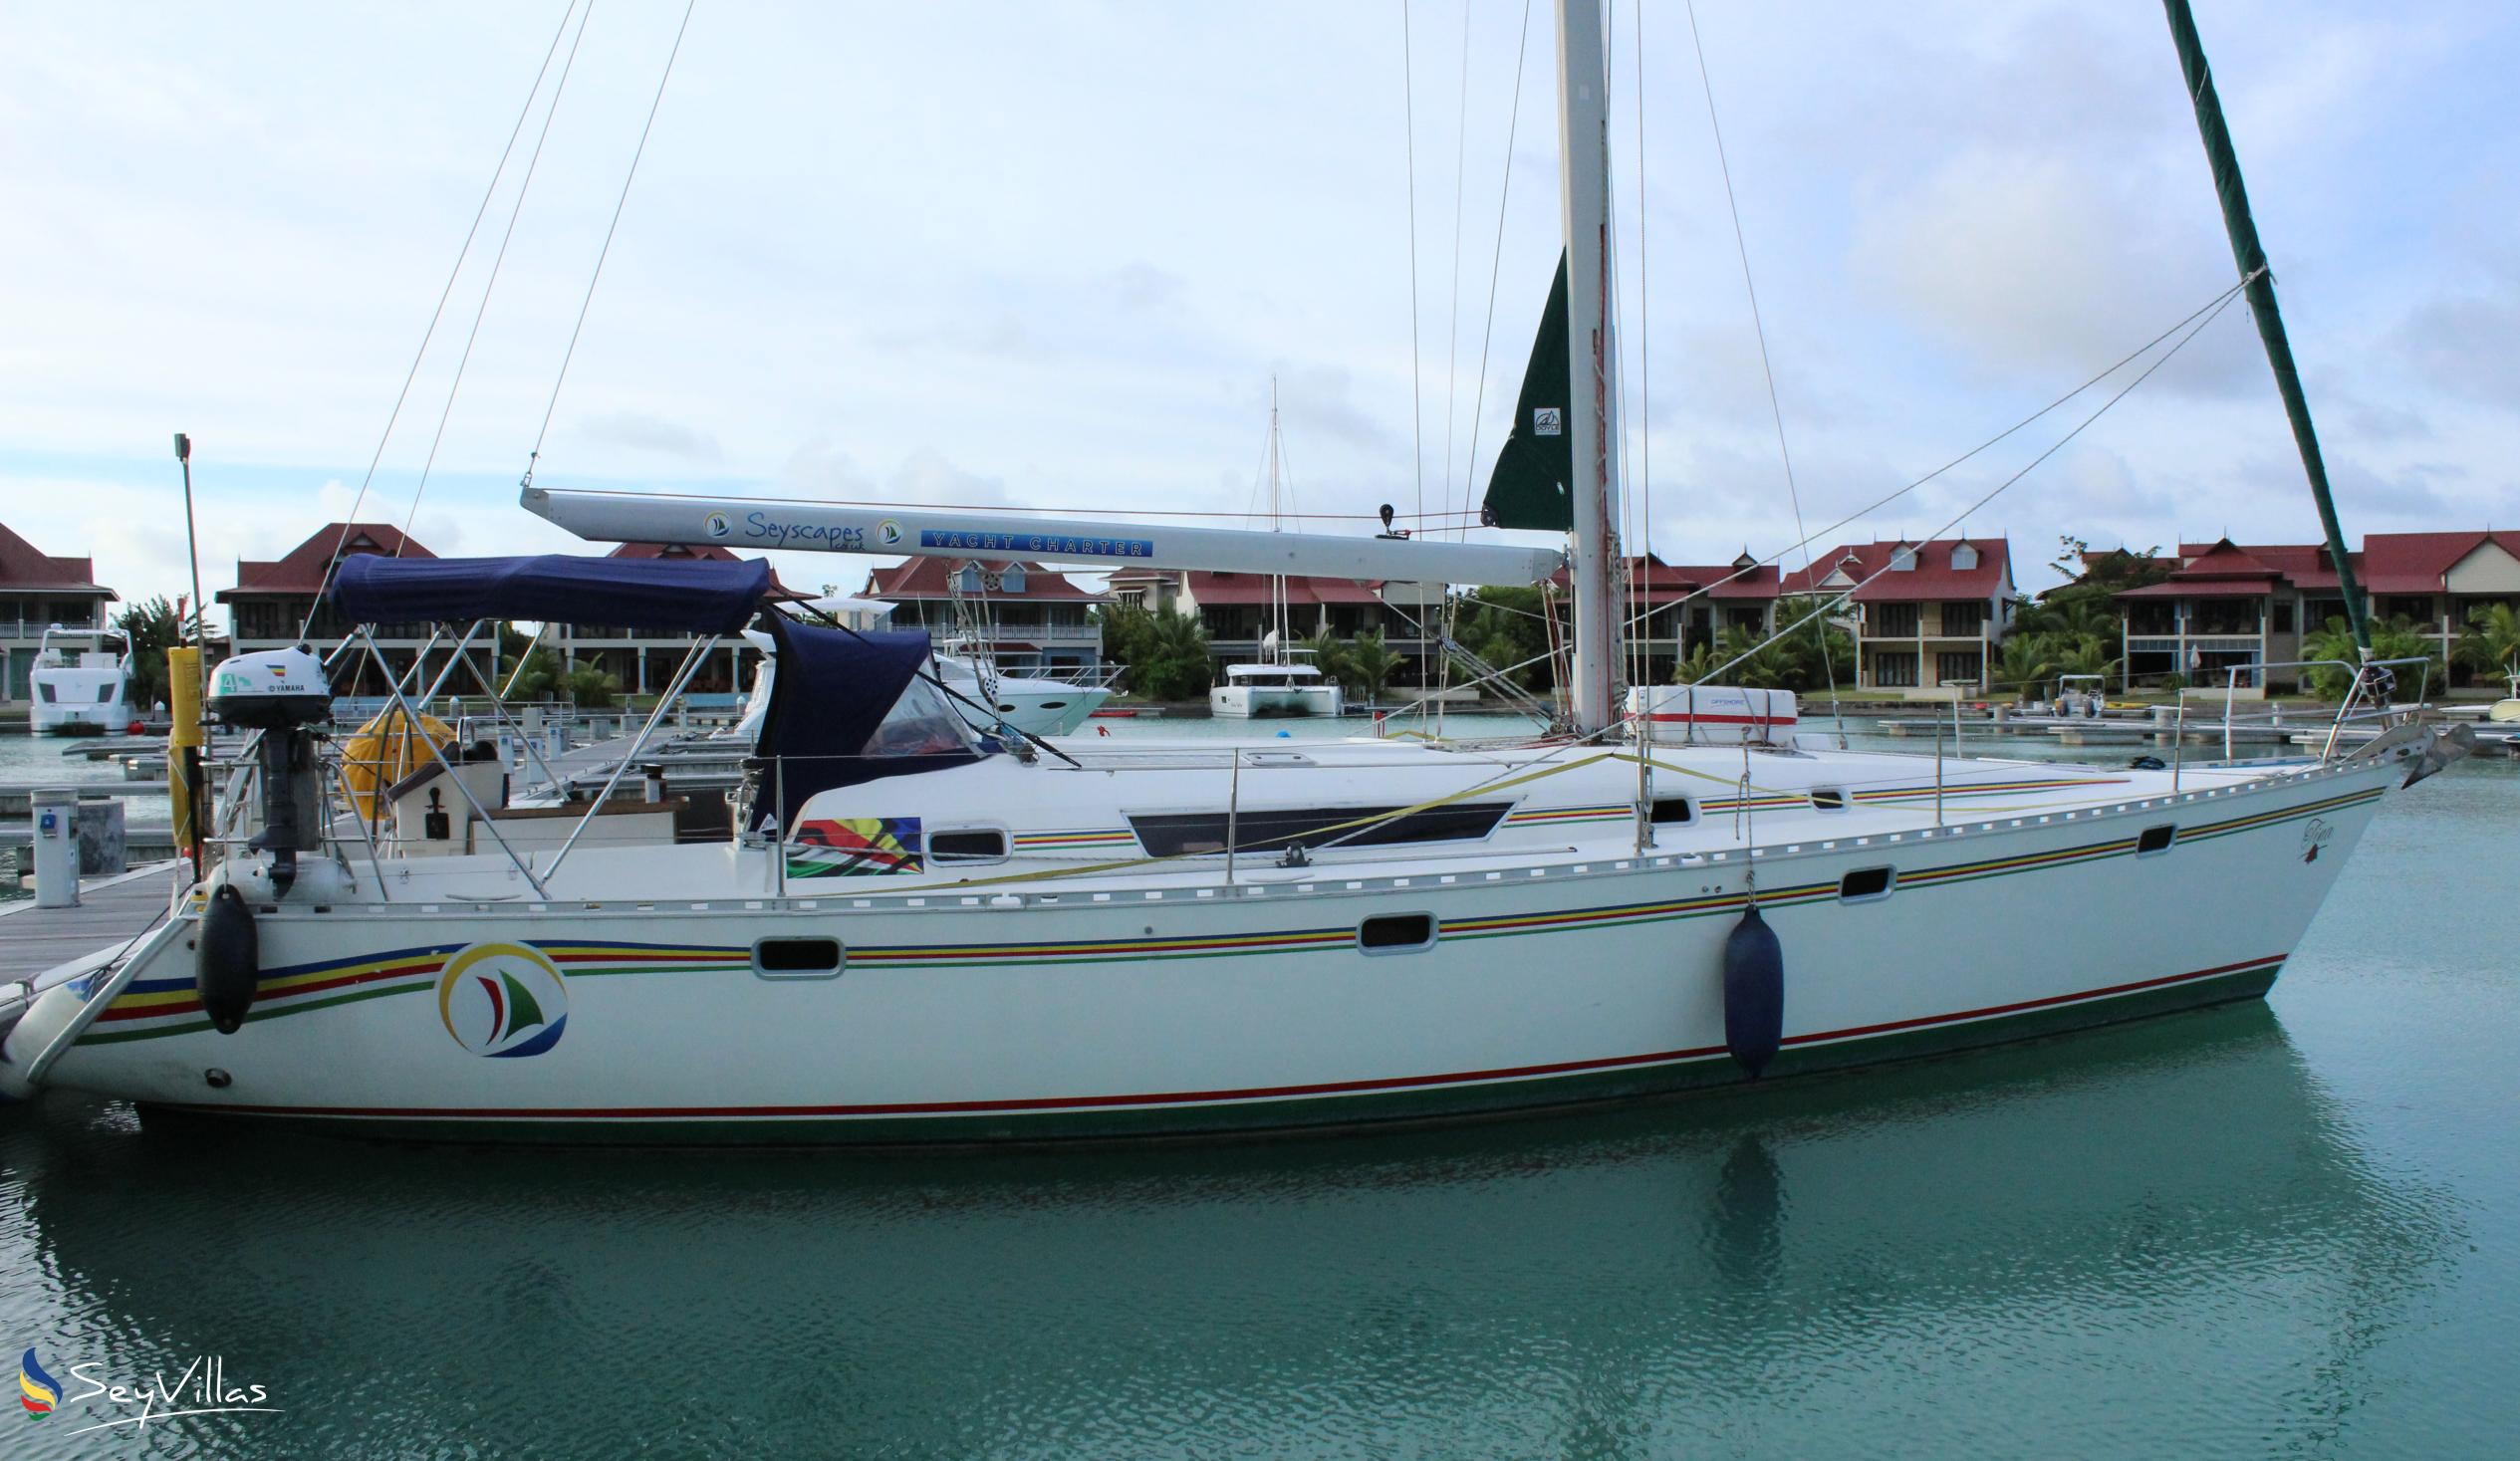 Foto 8: Seyscapes Yacht Charter - Extérieur - Seychelles (Seychelles)